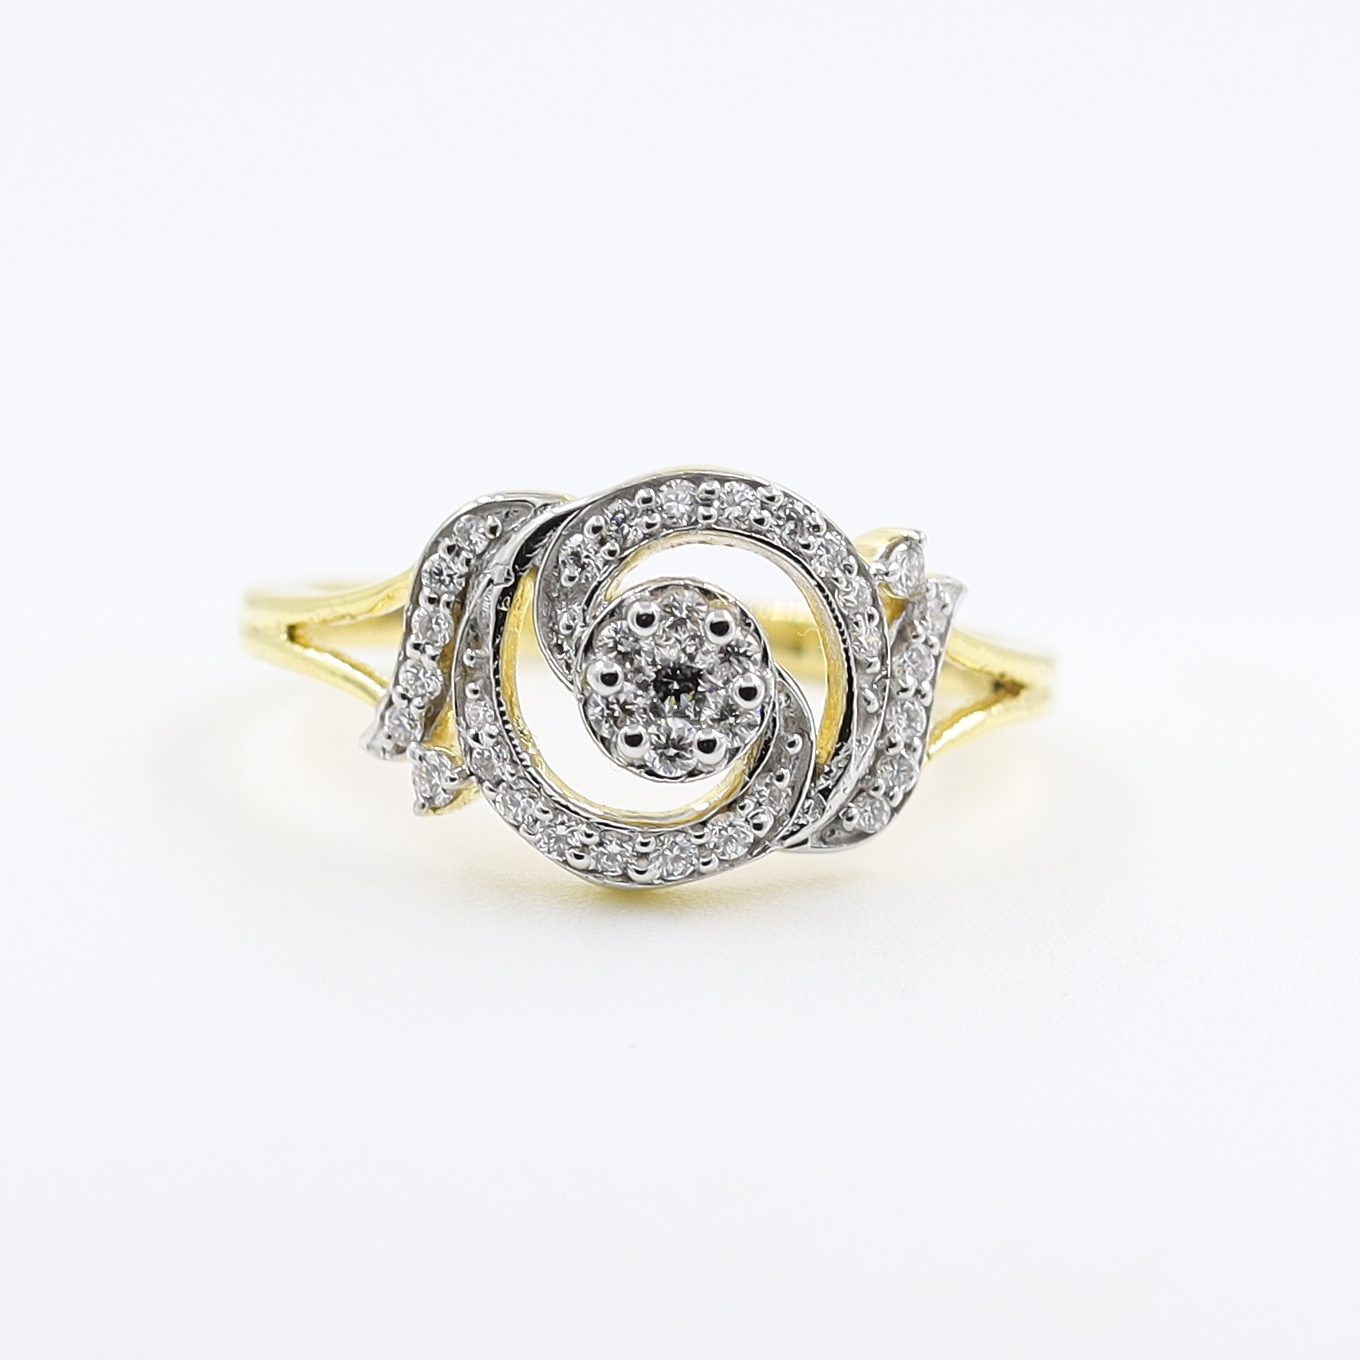 18Kt Yellow Gold Diamond Ring With Pressure Diamond Work